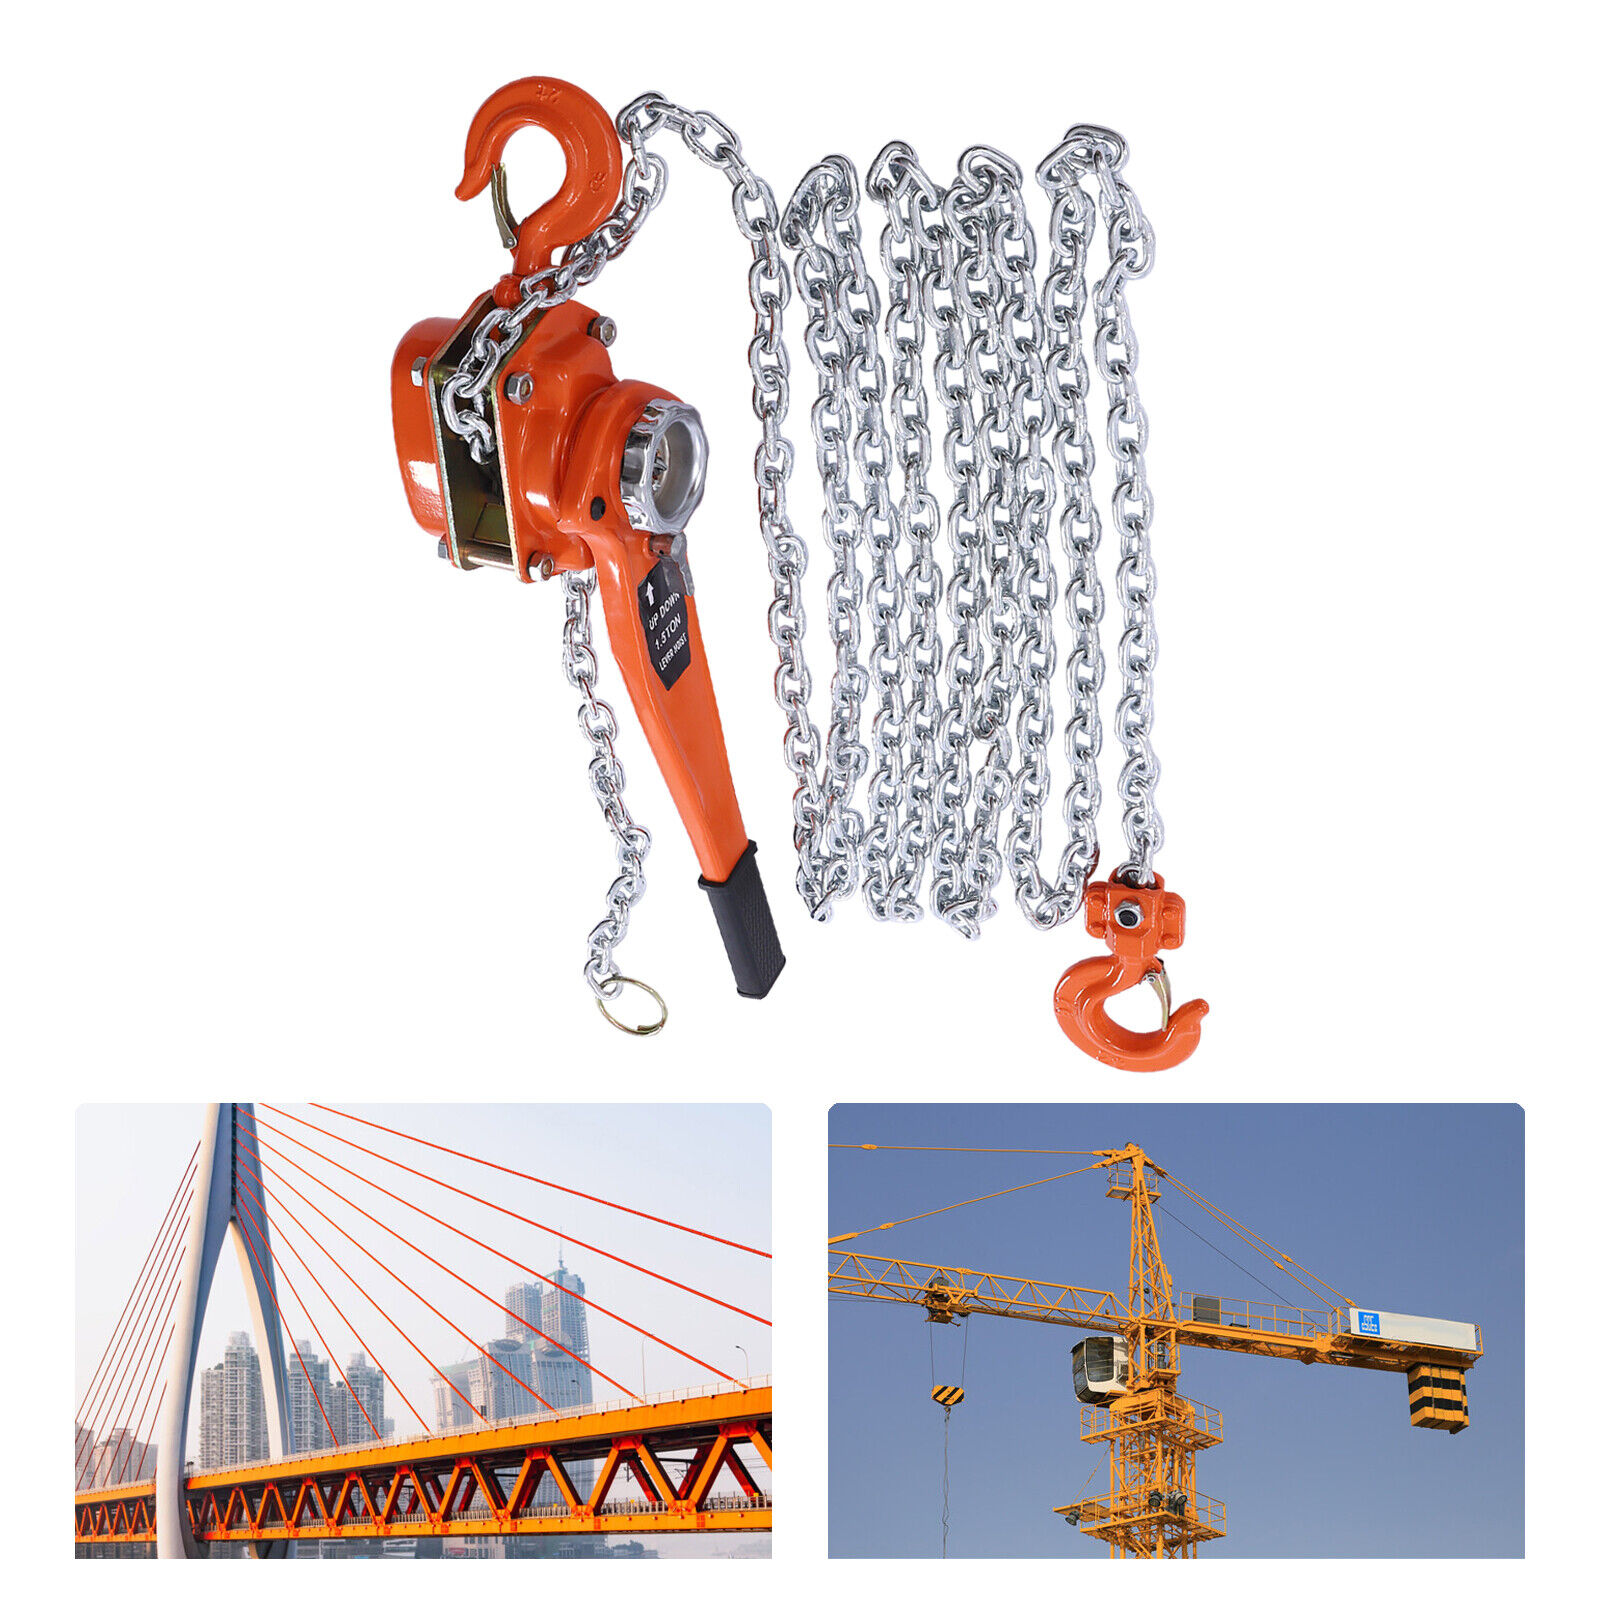 1 Ton Manual Lever Block Chain Hoist Ratchet Type Come Along Puller w/20FT Chain